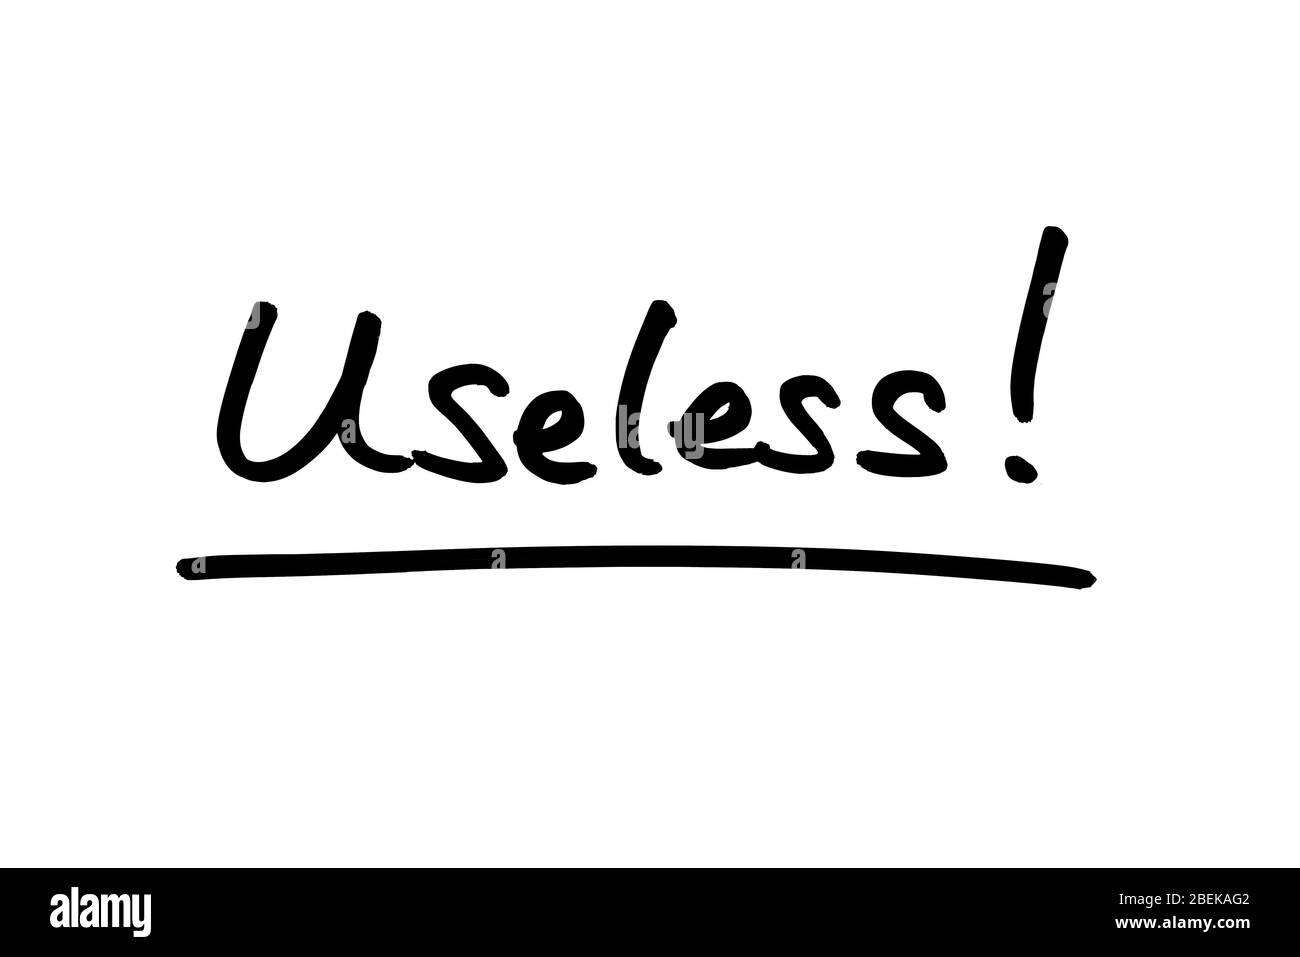 Useless! handwritten on a white background. Stock Photo